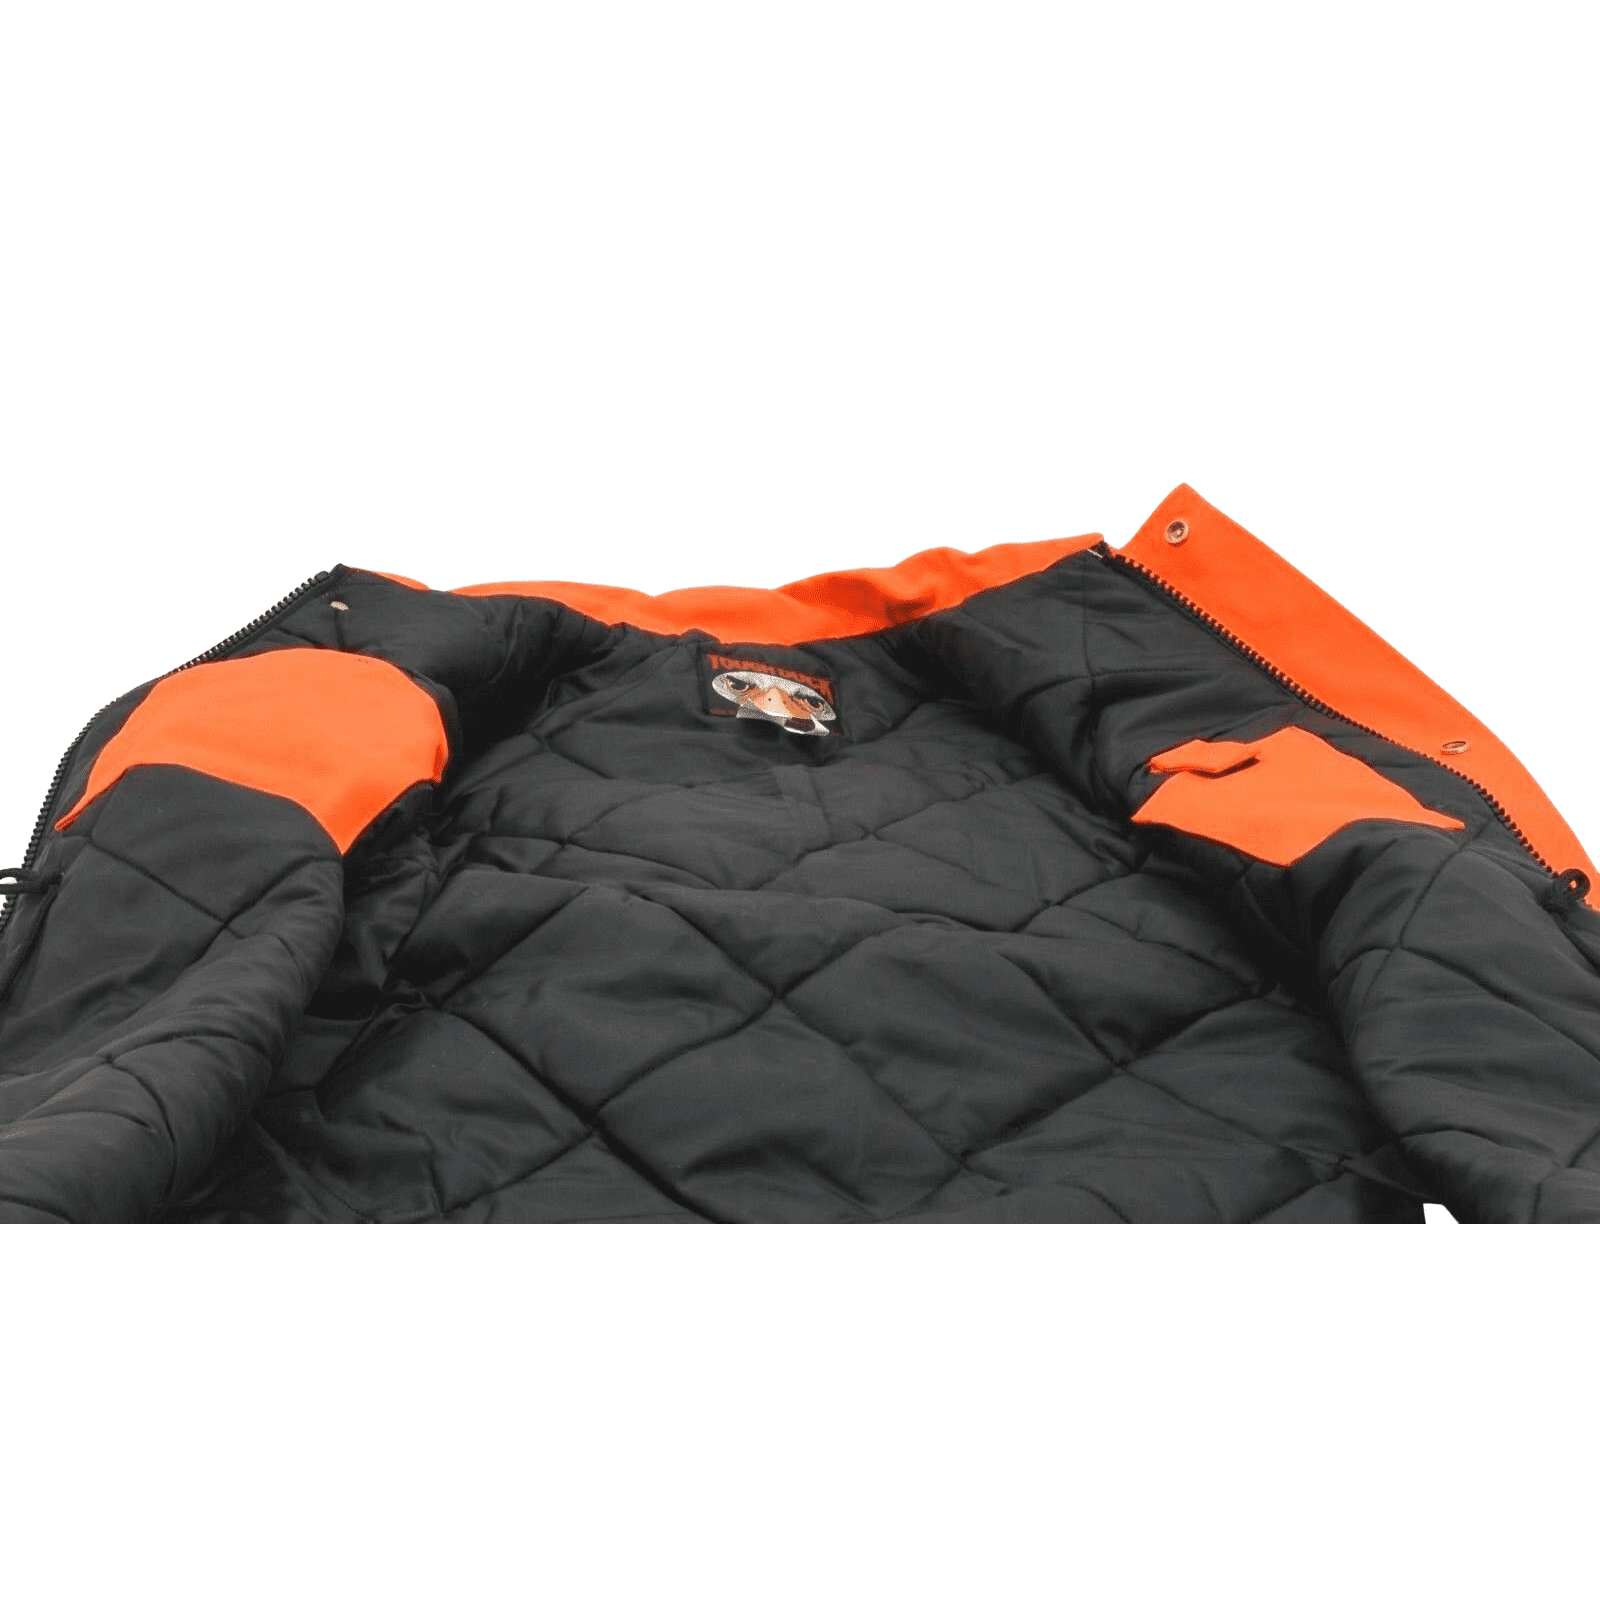 Tough Duck men's work jacket High Vision Orange with Sasfety Stripes in size medium